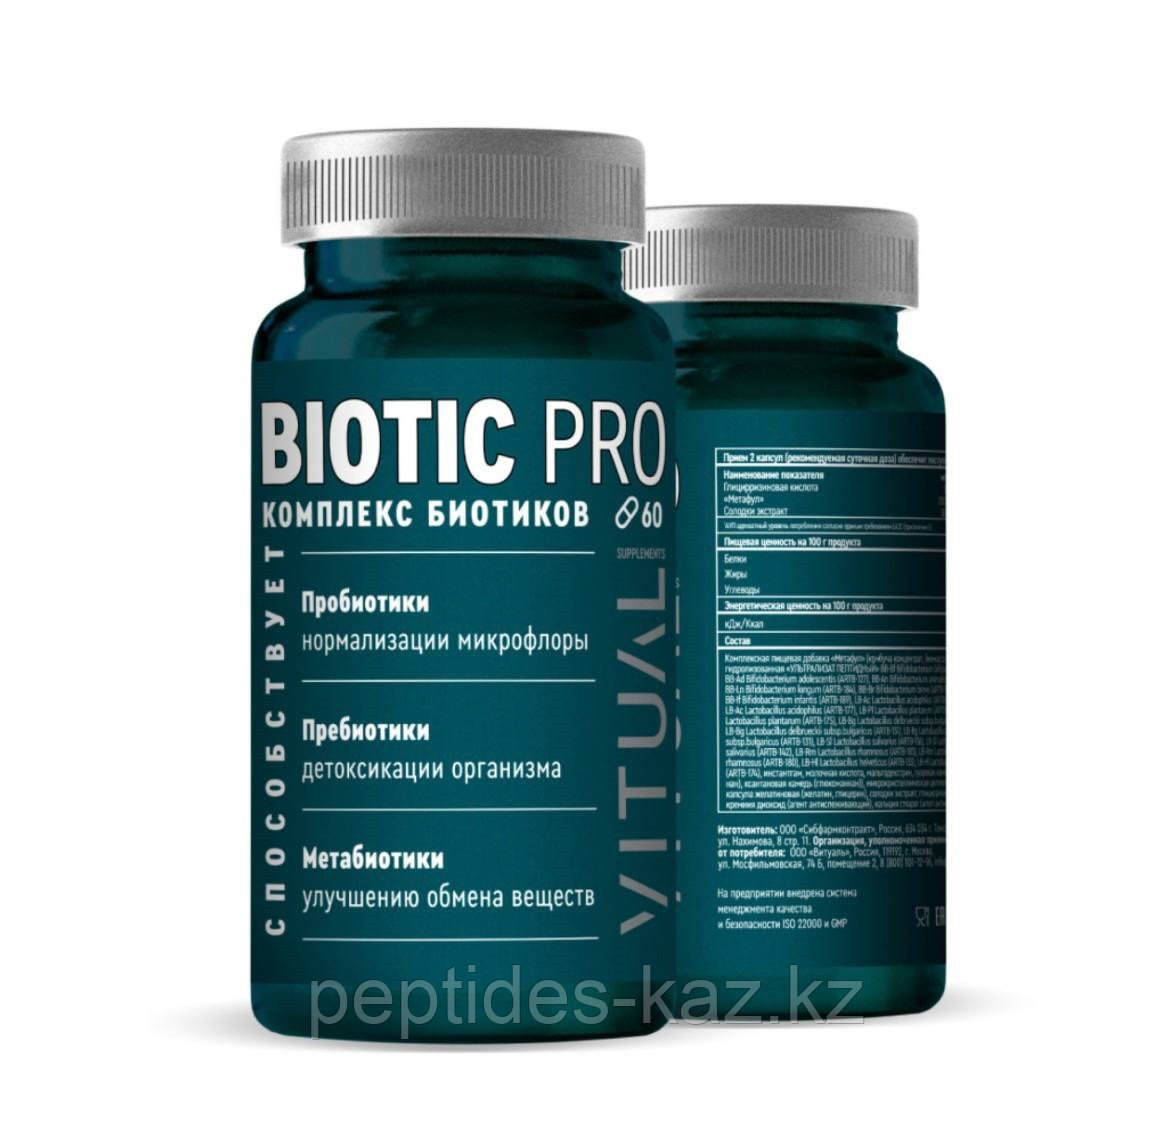 BIOTIC PRO, Биотик ПРО метабиотик с лизатами пробиотиков и пребиотиков